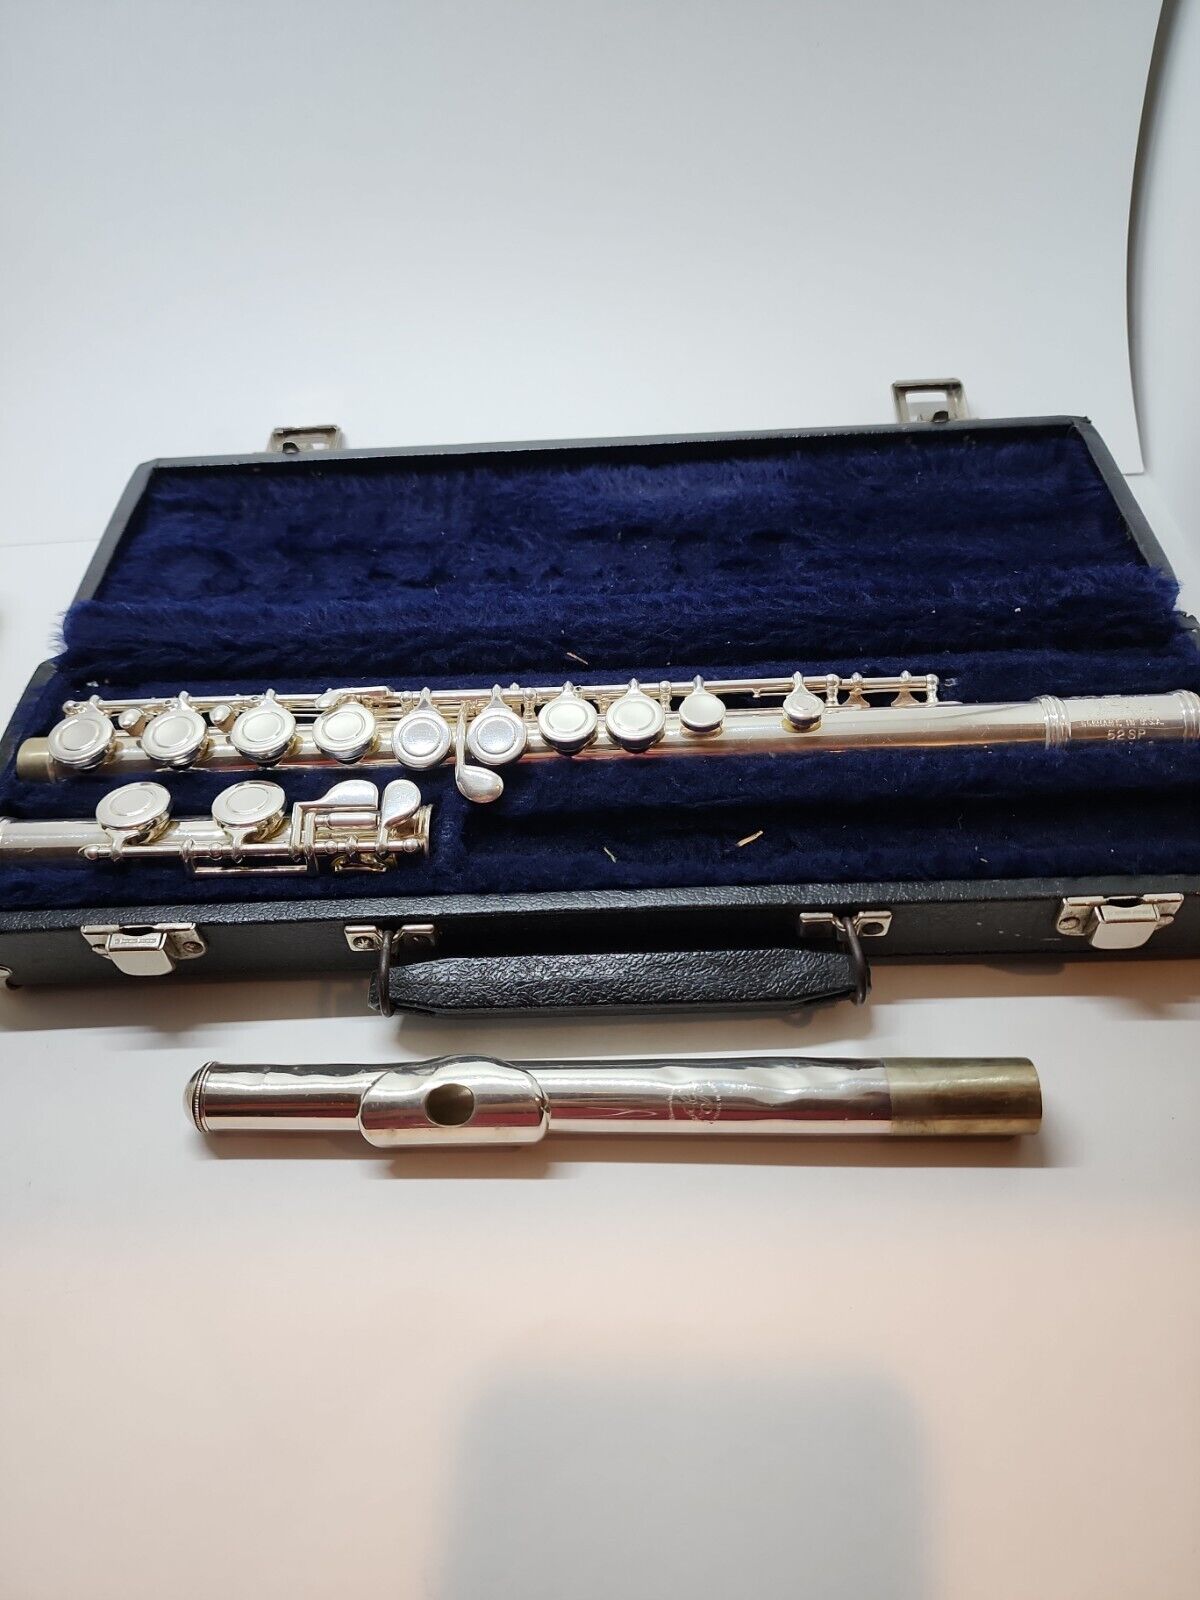 Gemeinhardt 50 Series 52 Sp Flute For Parts Ib1